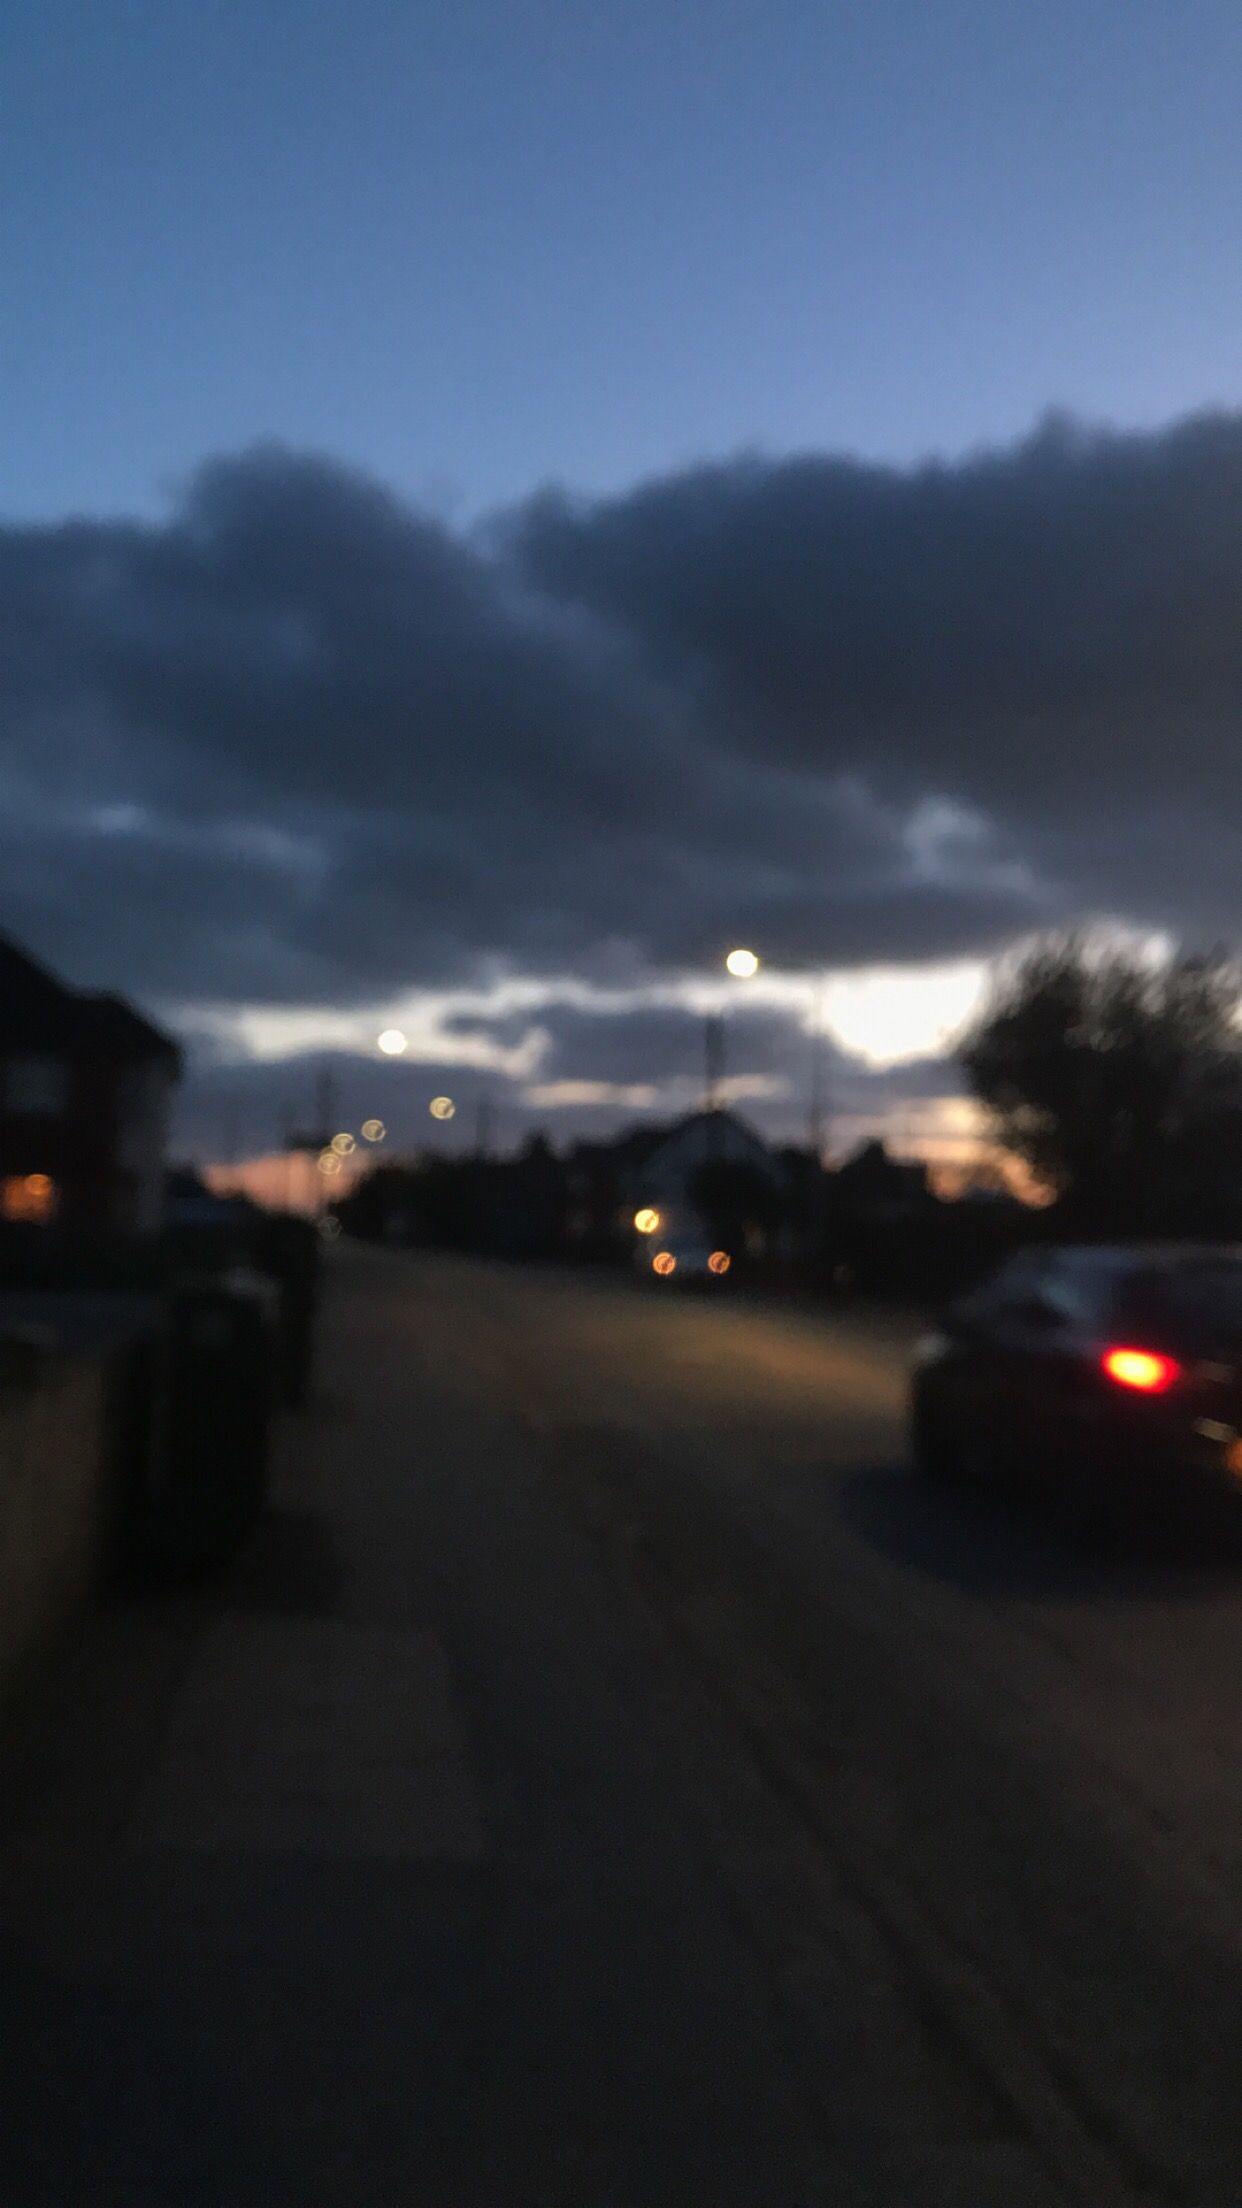 Late night walk ;) #Night #Clouds #Calm #Lights #Blurry #Cold. Sky aesthetic, Blurry lights, Night aesthetic